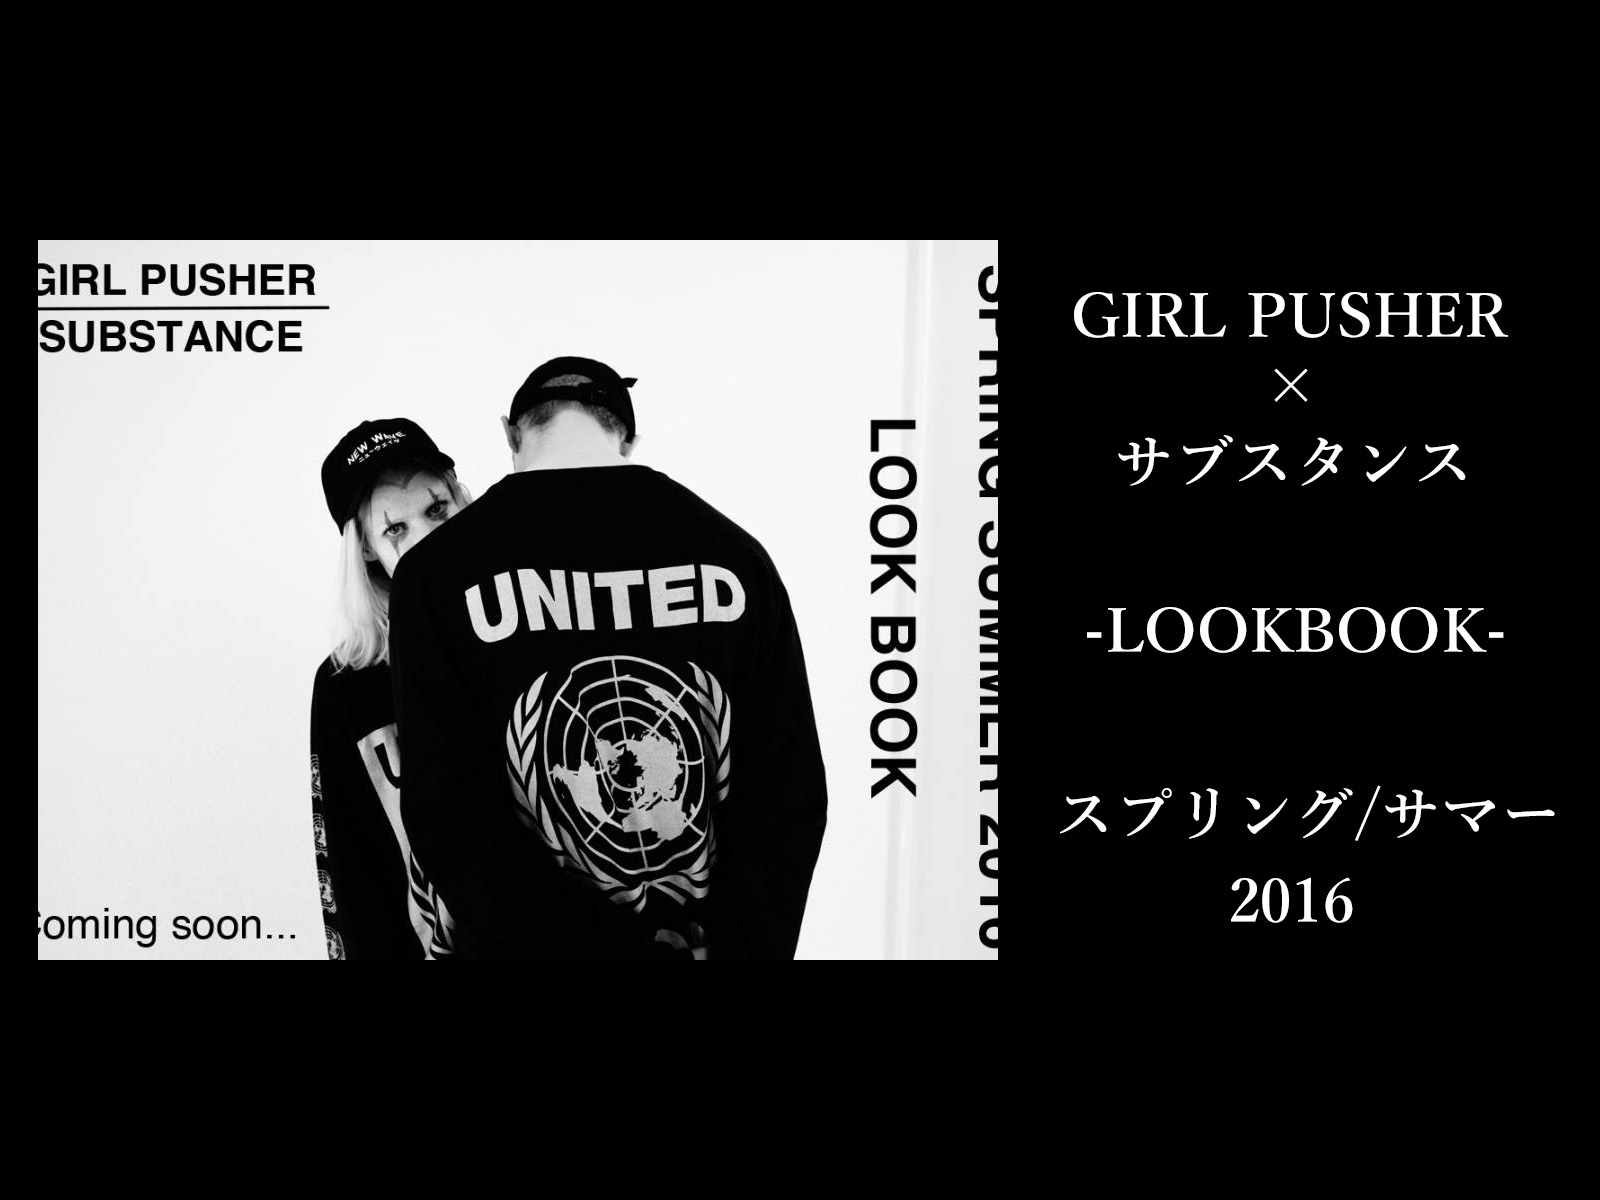 GIRL PUSHER × SUBSTANCE – LOOKBOOK S/S 2016